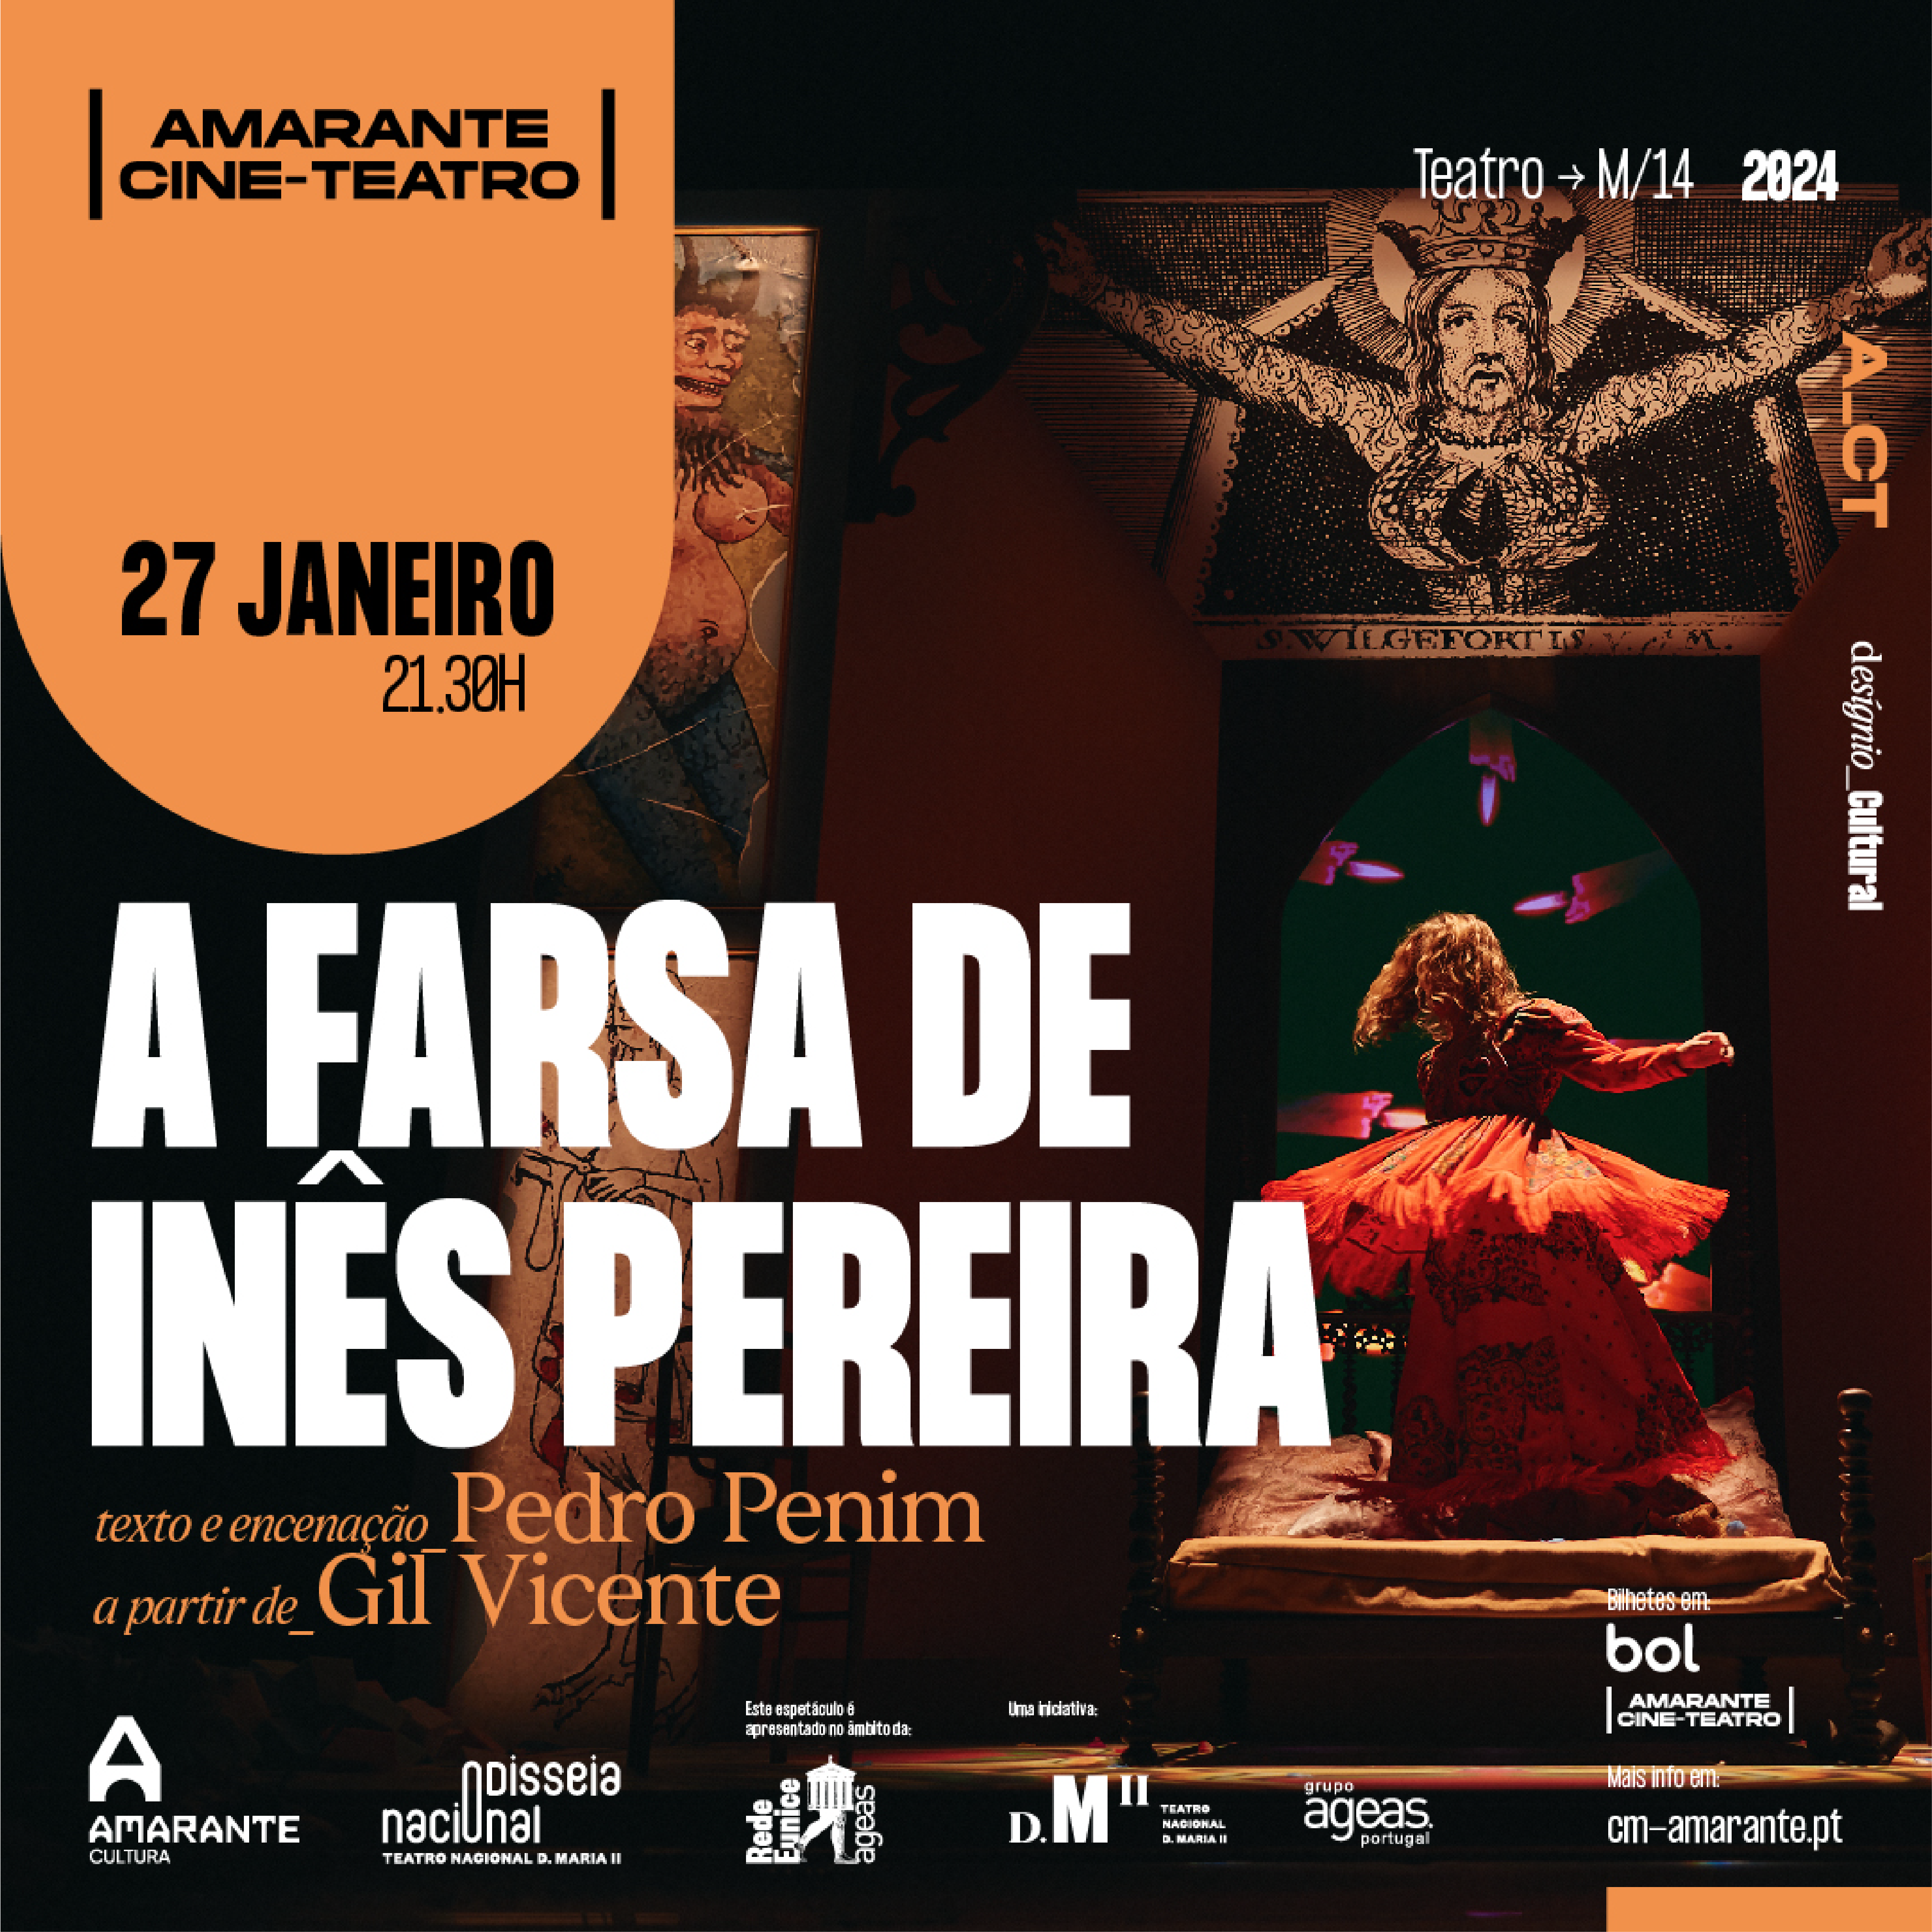 Teatro – “A FARSA DE INÊS PEREIRA” – TEATRO NACIONAL D. MARIA II